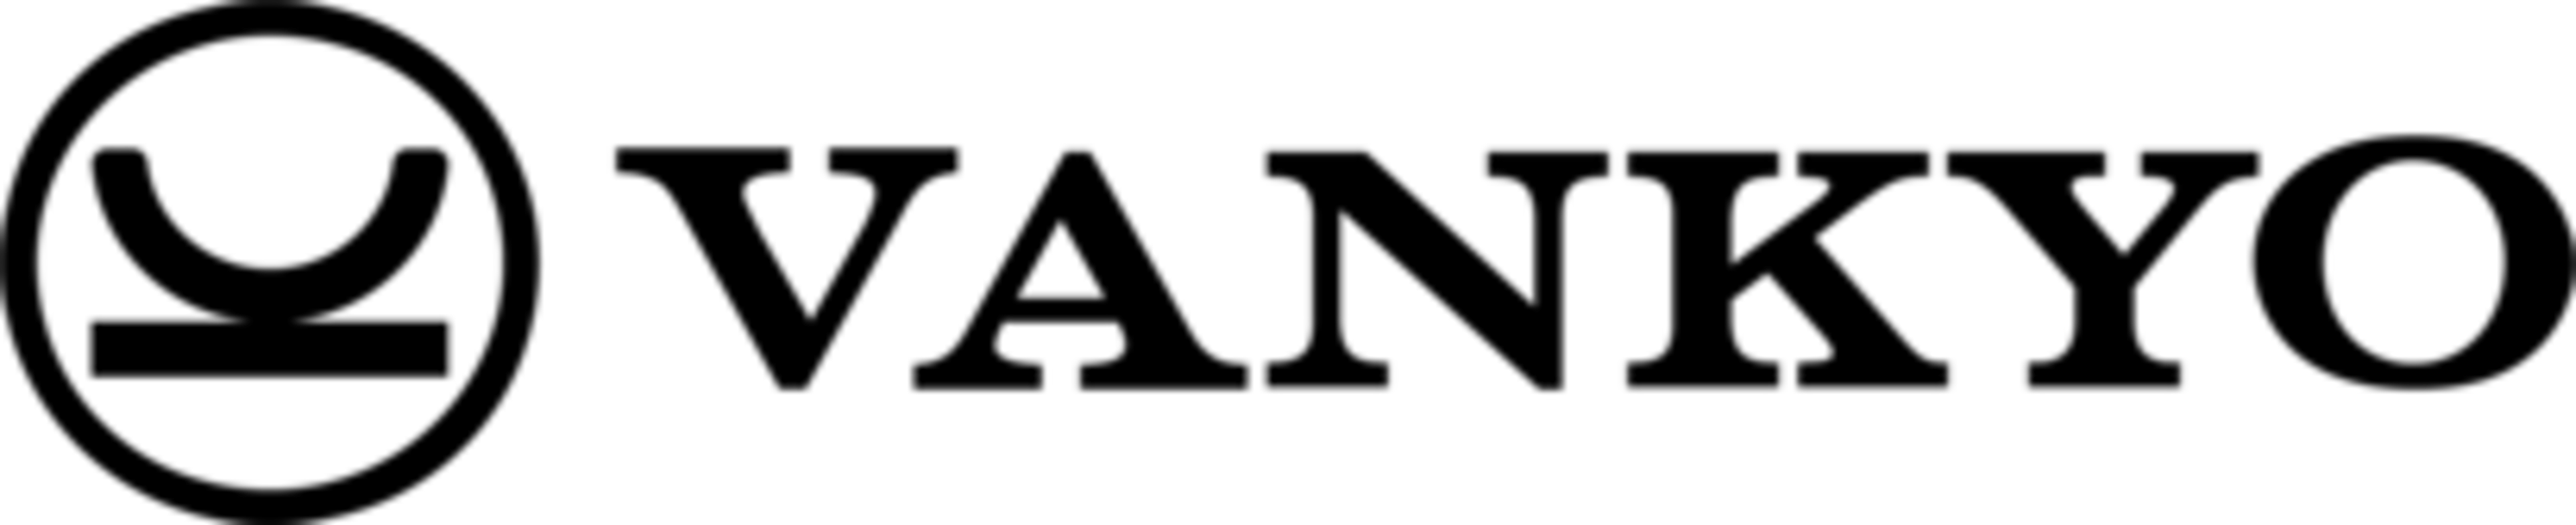 Vankyo logo